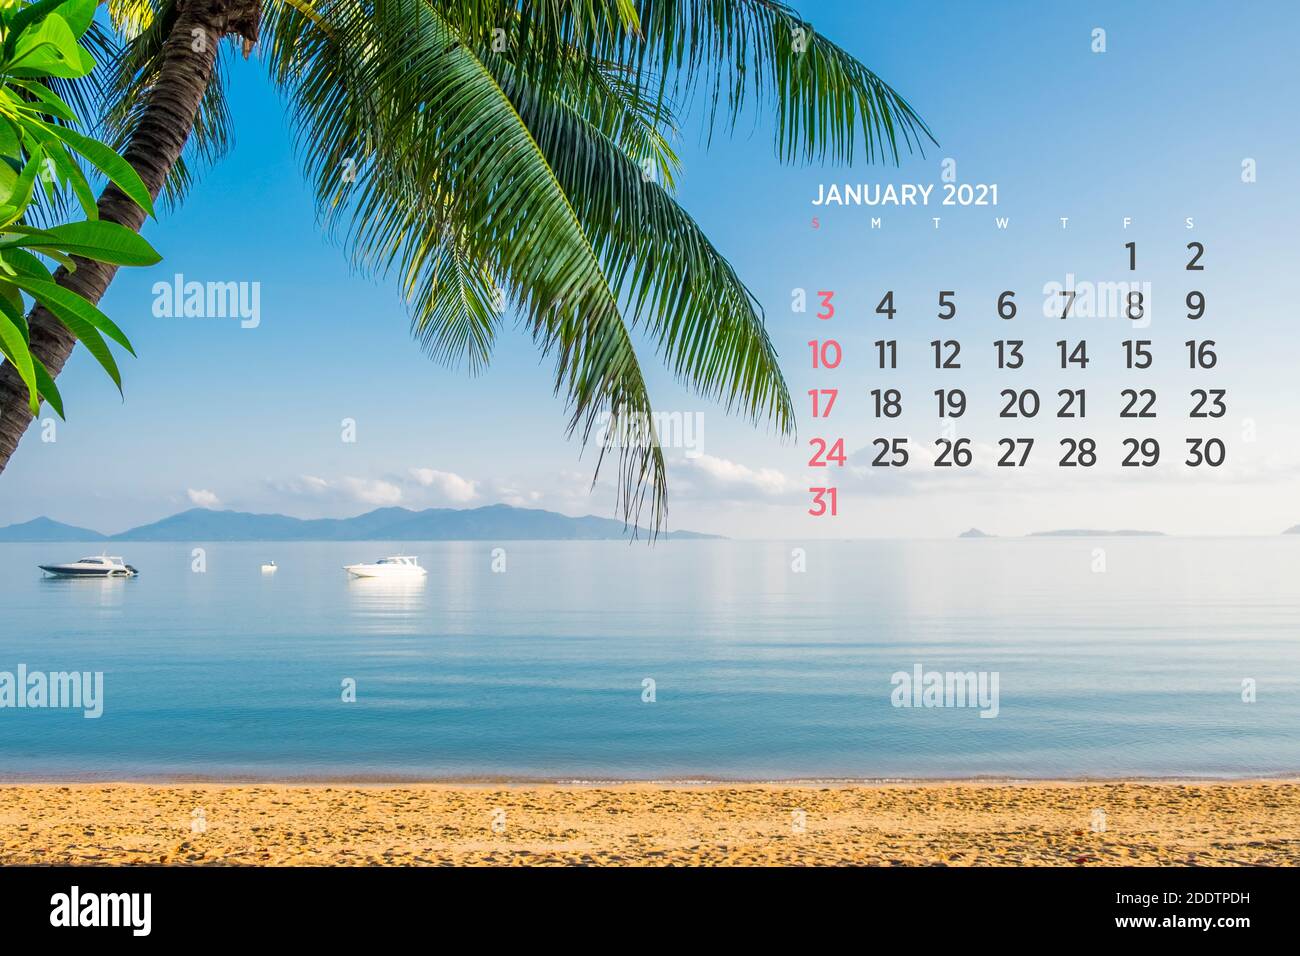 Calendar January 2021. Sea, ocean, beach, tropical, nature theme. A2. 60 x 40 cm. 15.75 x 23.62 inches Stock Photo